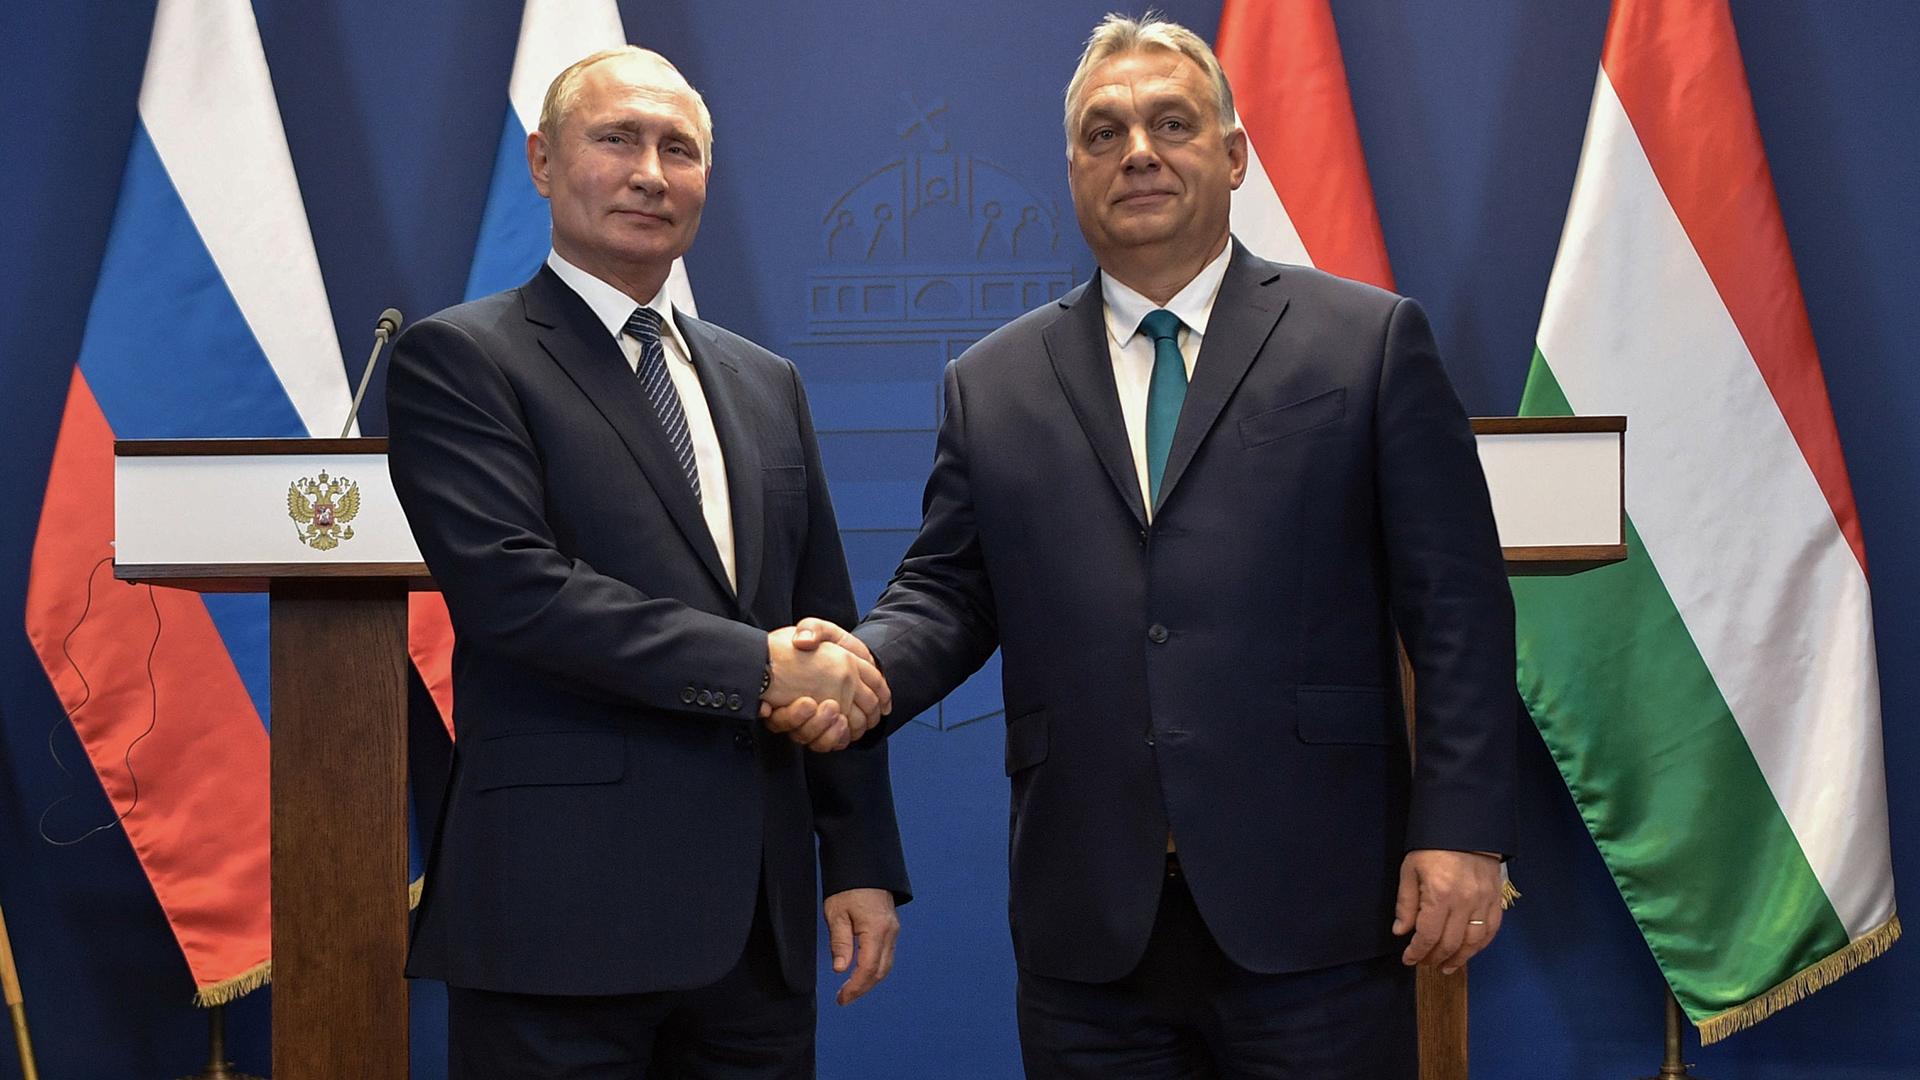 Wladimir Putin und Viktor Orban | picture alliance/dpa/Sputnik